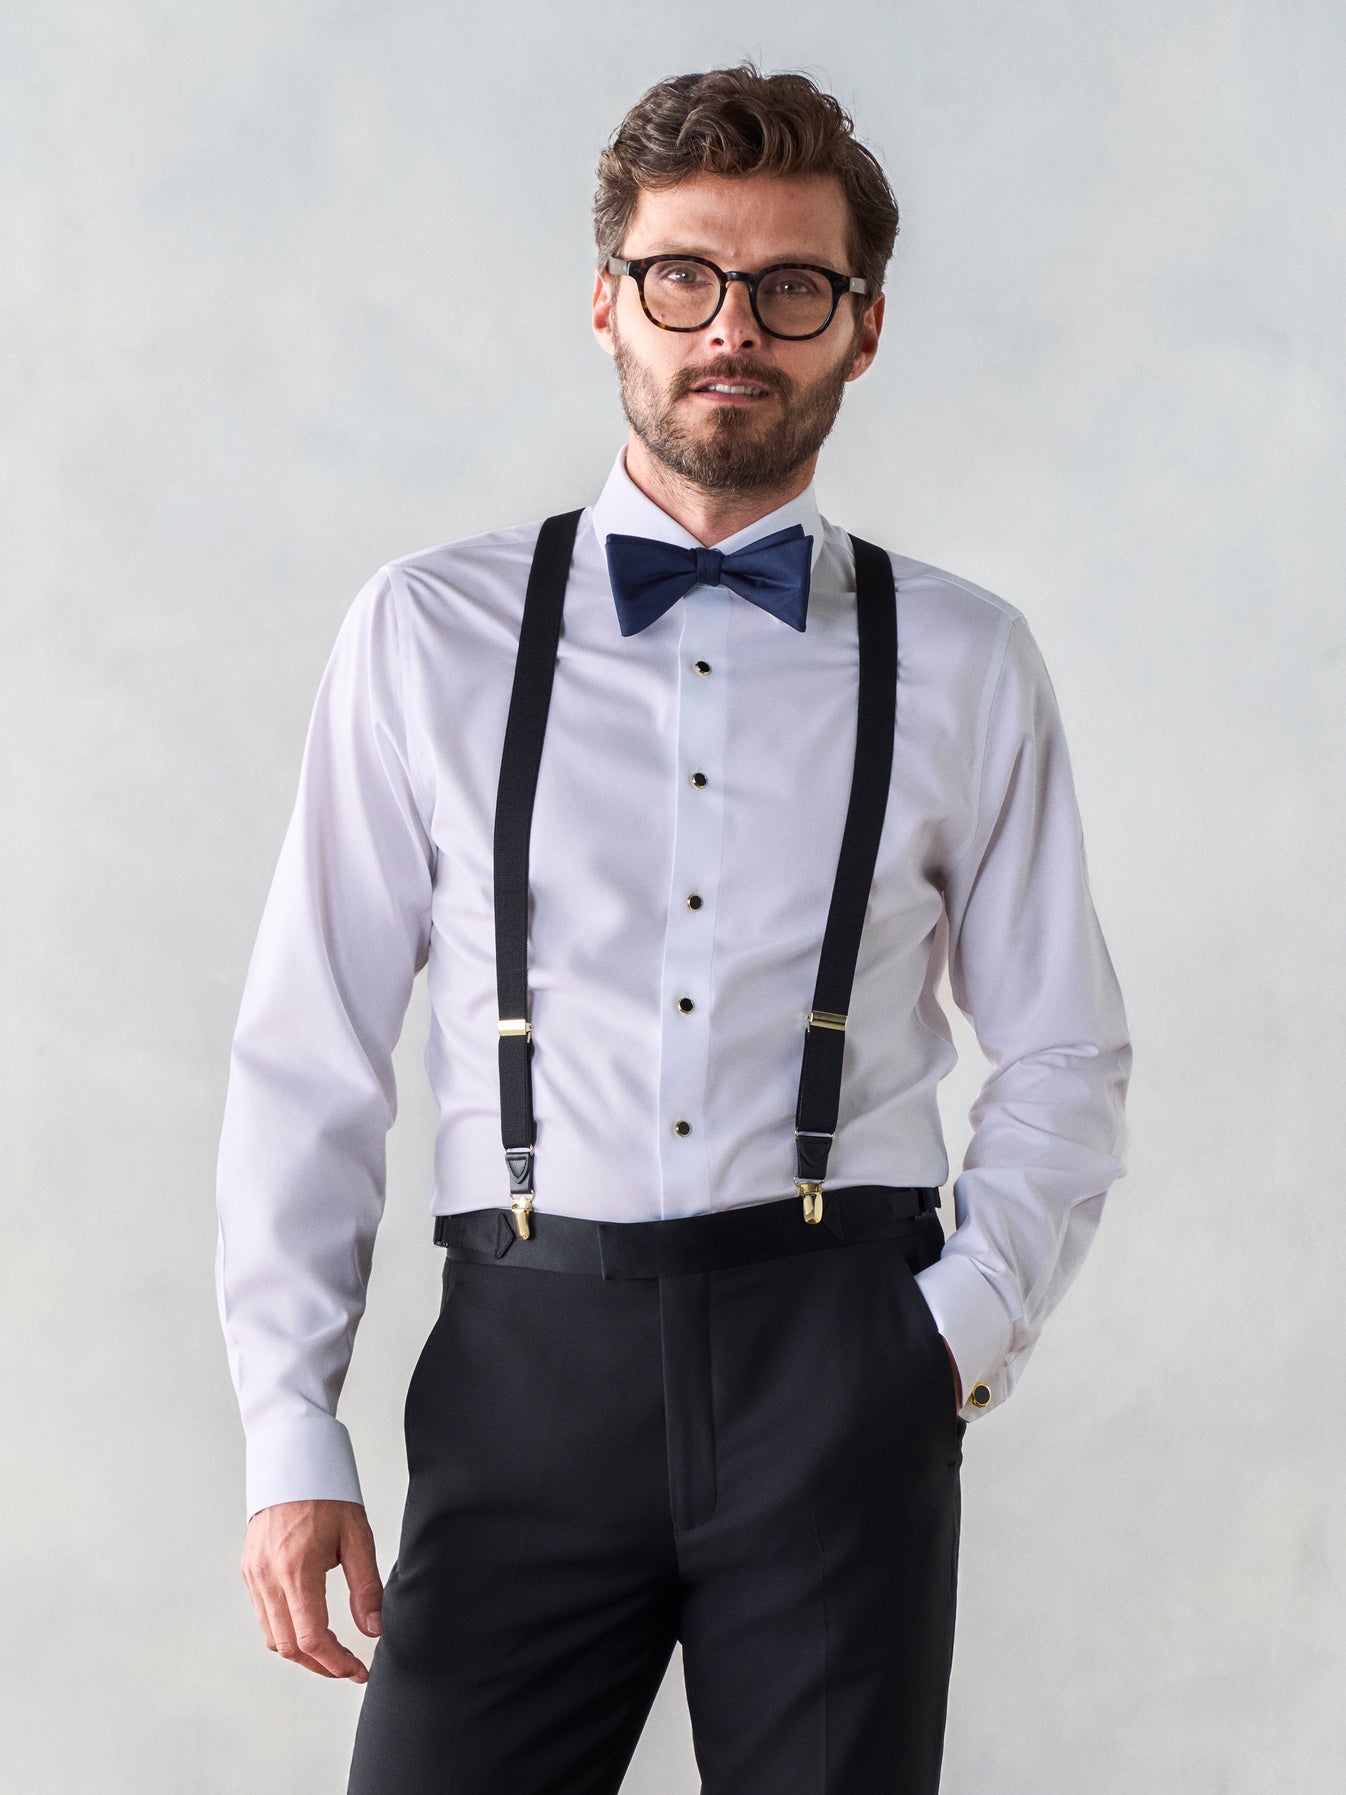 Suspenders – The Black Tux - Buy New